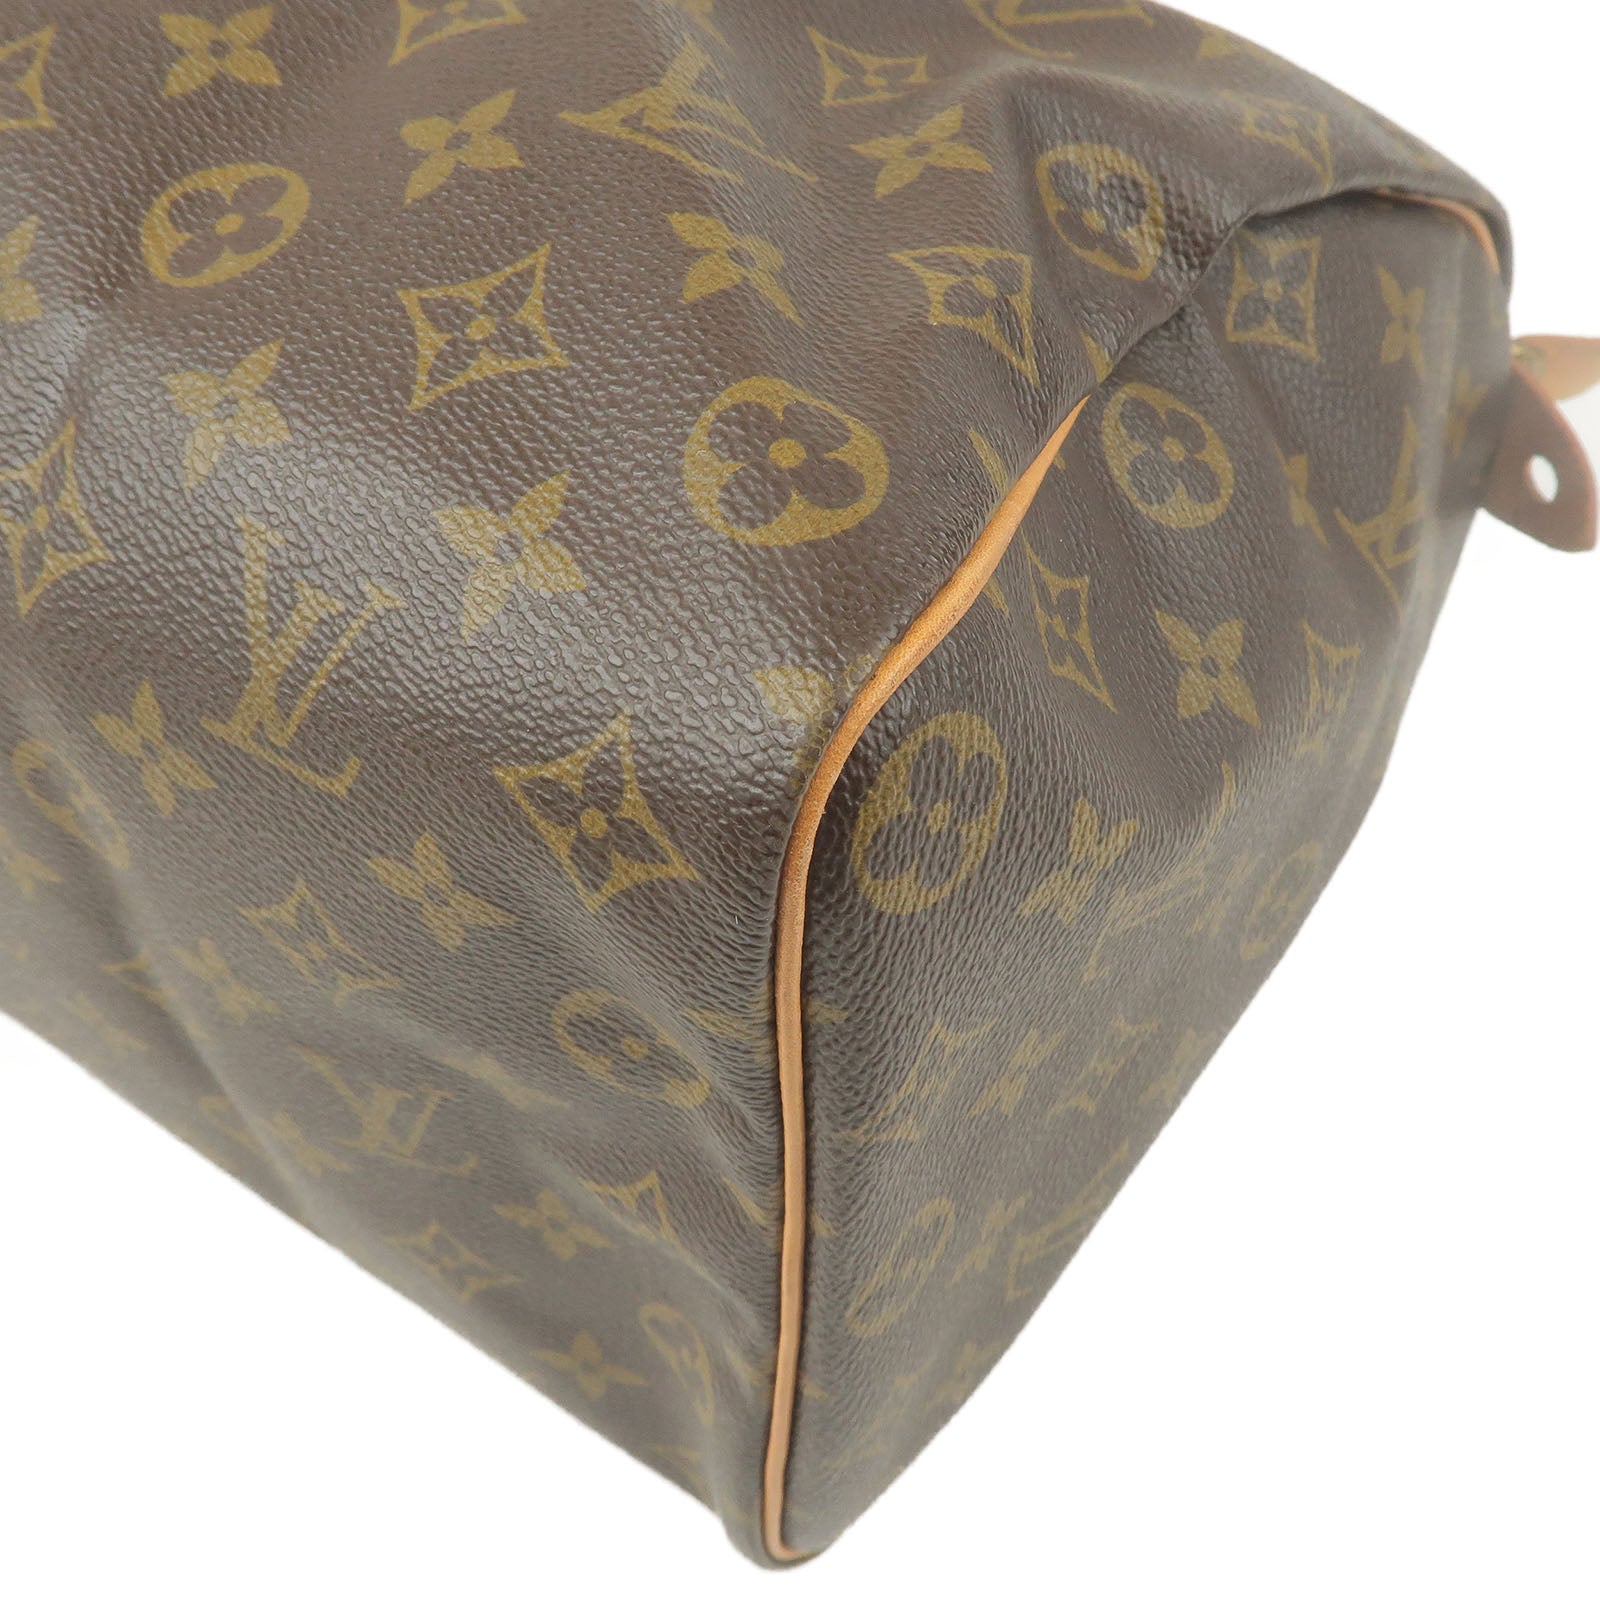 Louis Vuitton Speedy 35 Monogram Canvas Shoulder Bag